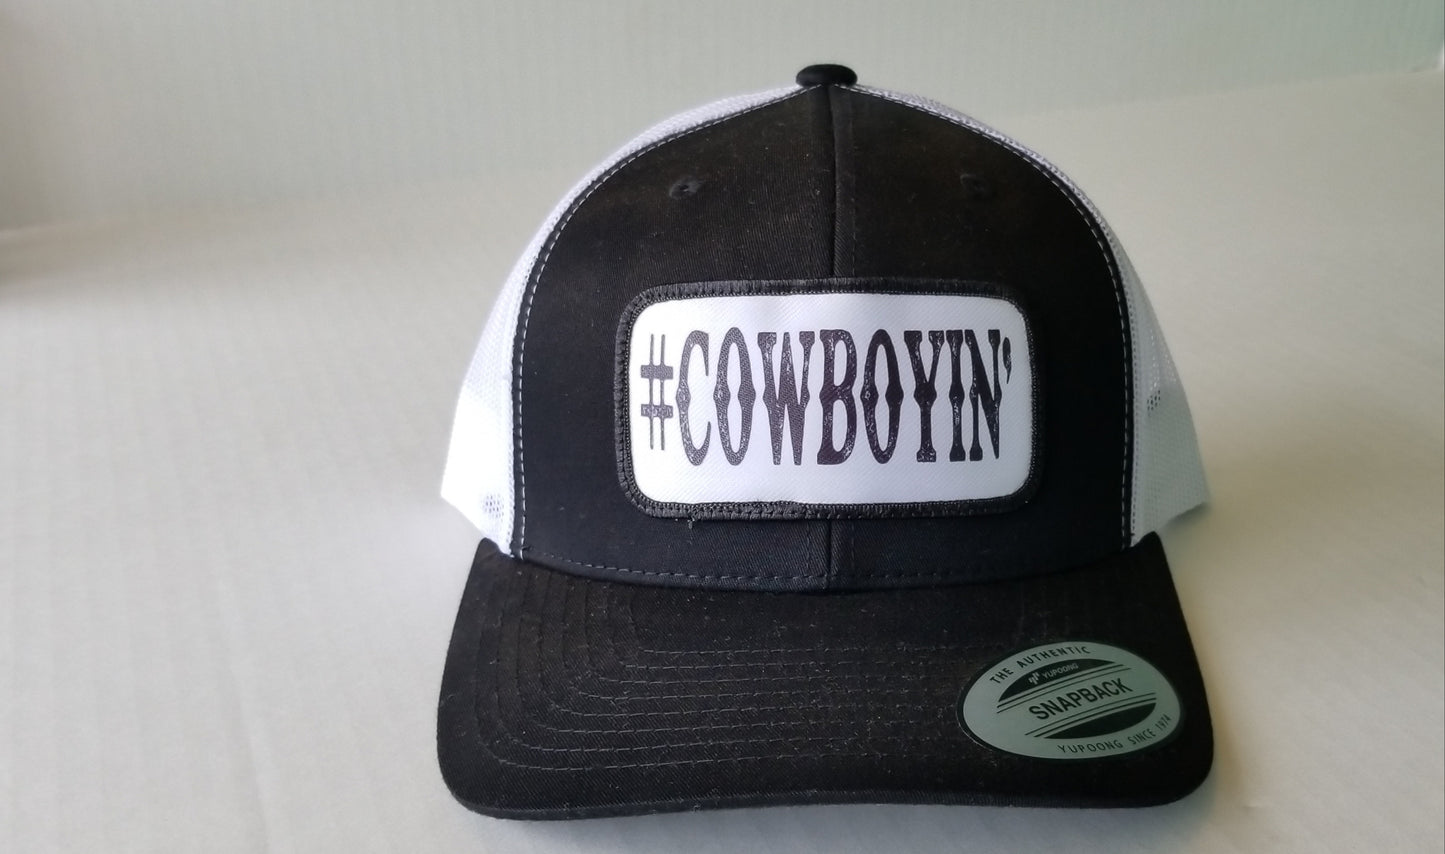 #Cowboyin' - Youth/Adult Trucker Hat - Black & White